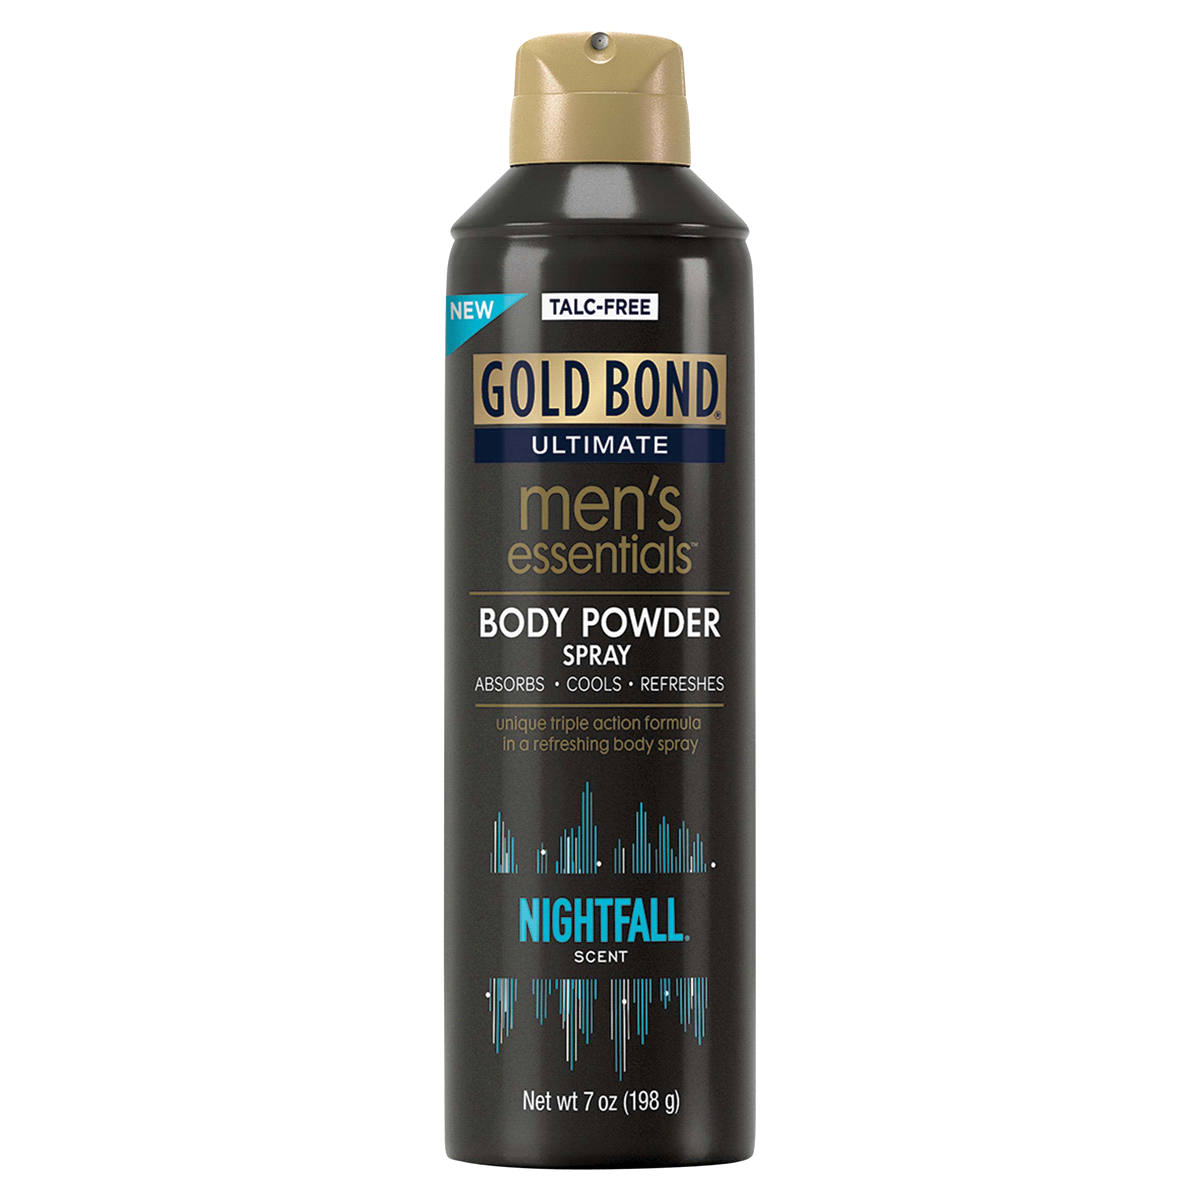 slide 1 of 1, Gold Bond Ultimate Men's Essentials No Talc Body Powder Spray Nightfall, 7 oz